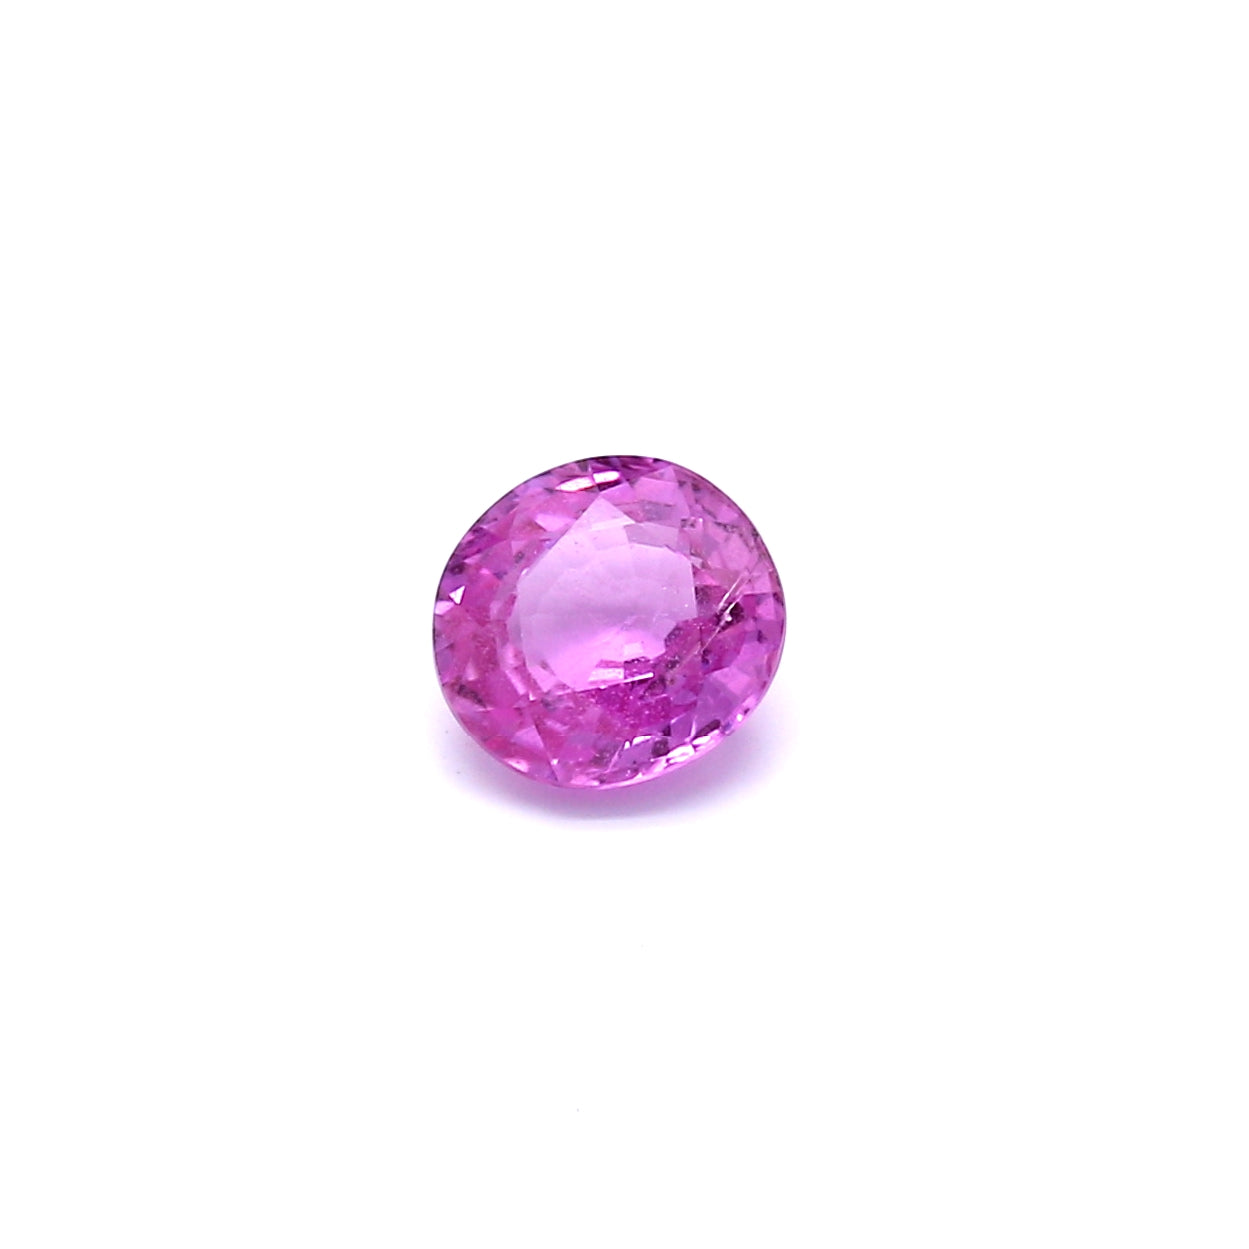 1.15ct Pink, Oval Sapphire, Heated, Madagascar - 6.19 x 5.82 x 3.52mm